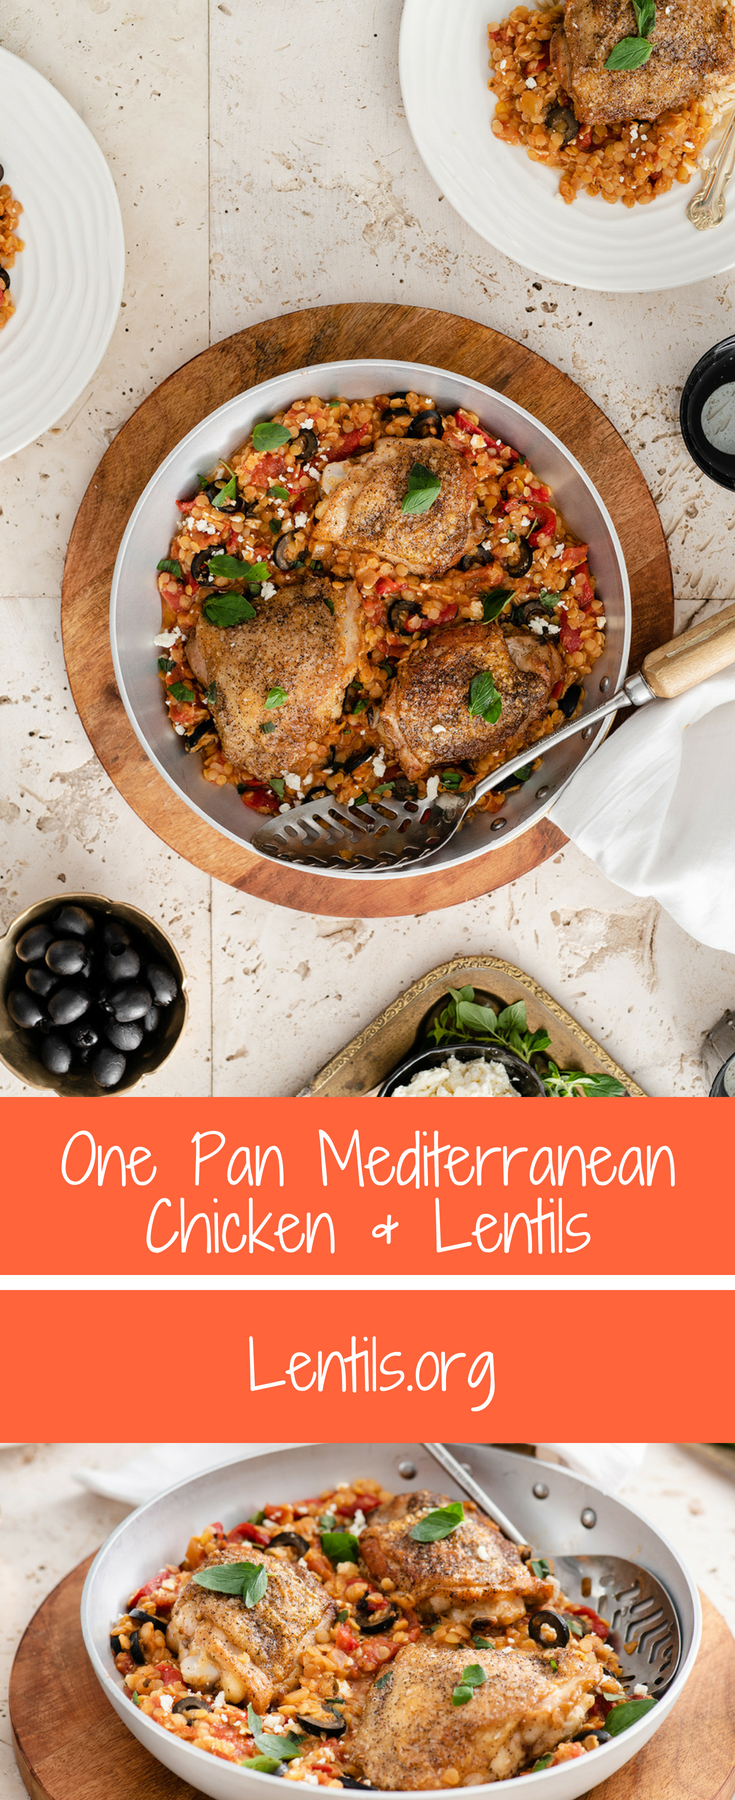 One Pan Mediterranean Chicken & Lentils Skillet Meal